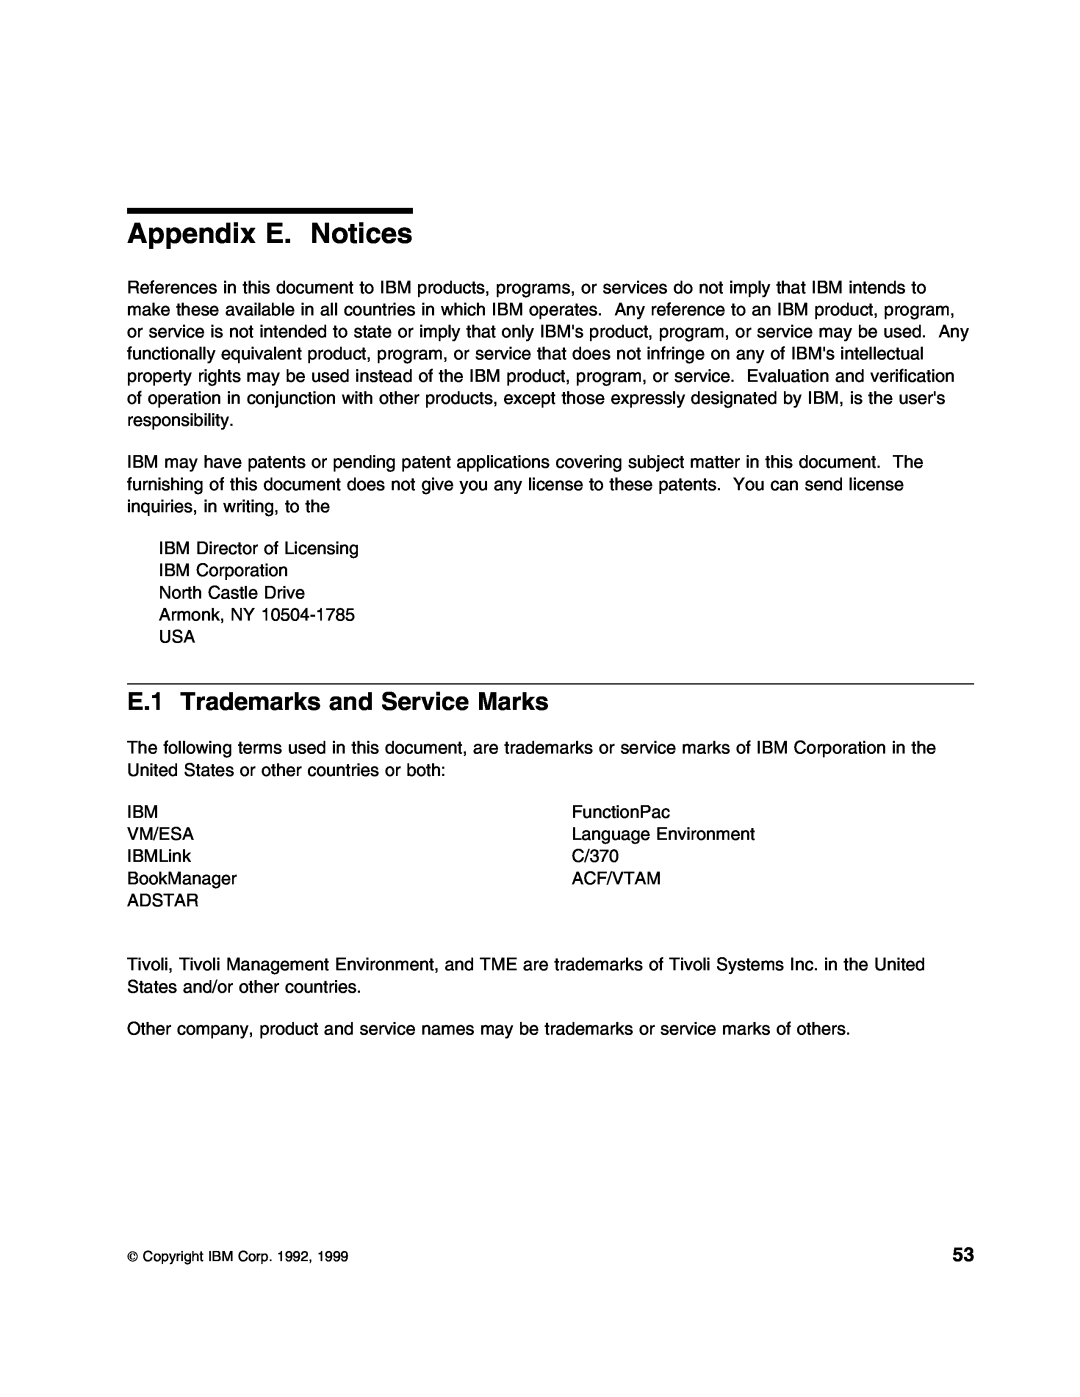 IBM 5697-VM3 manual Appendix E. Notices, E.1 Trademarks and Service Marks 